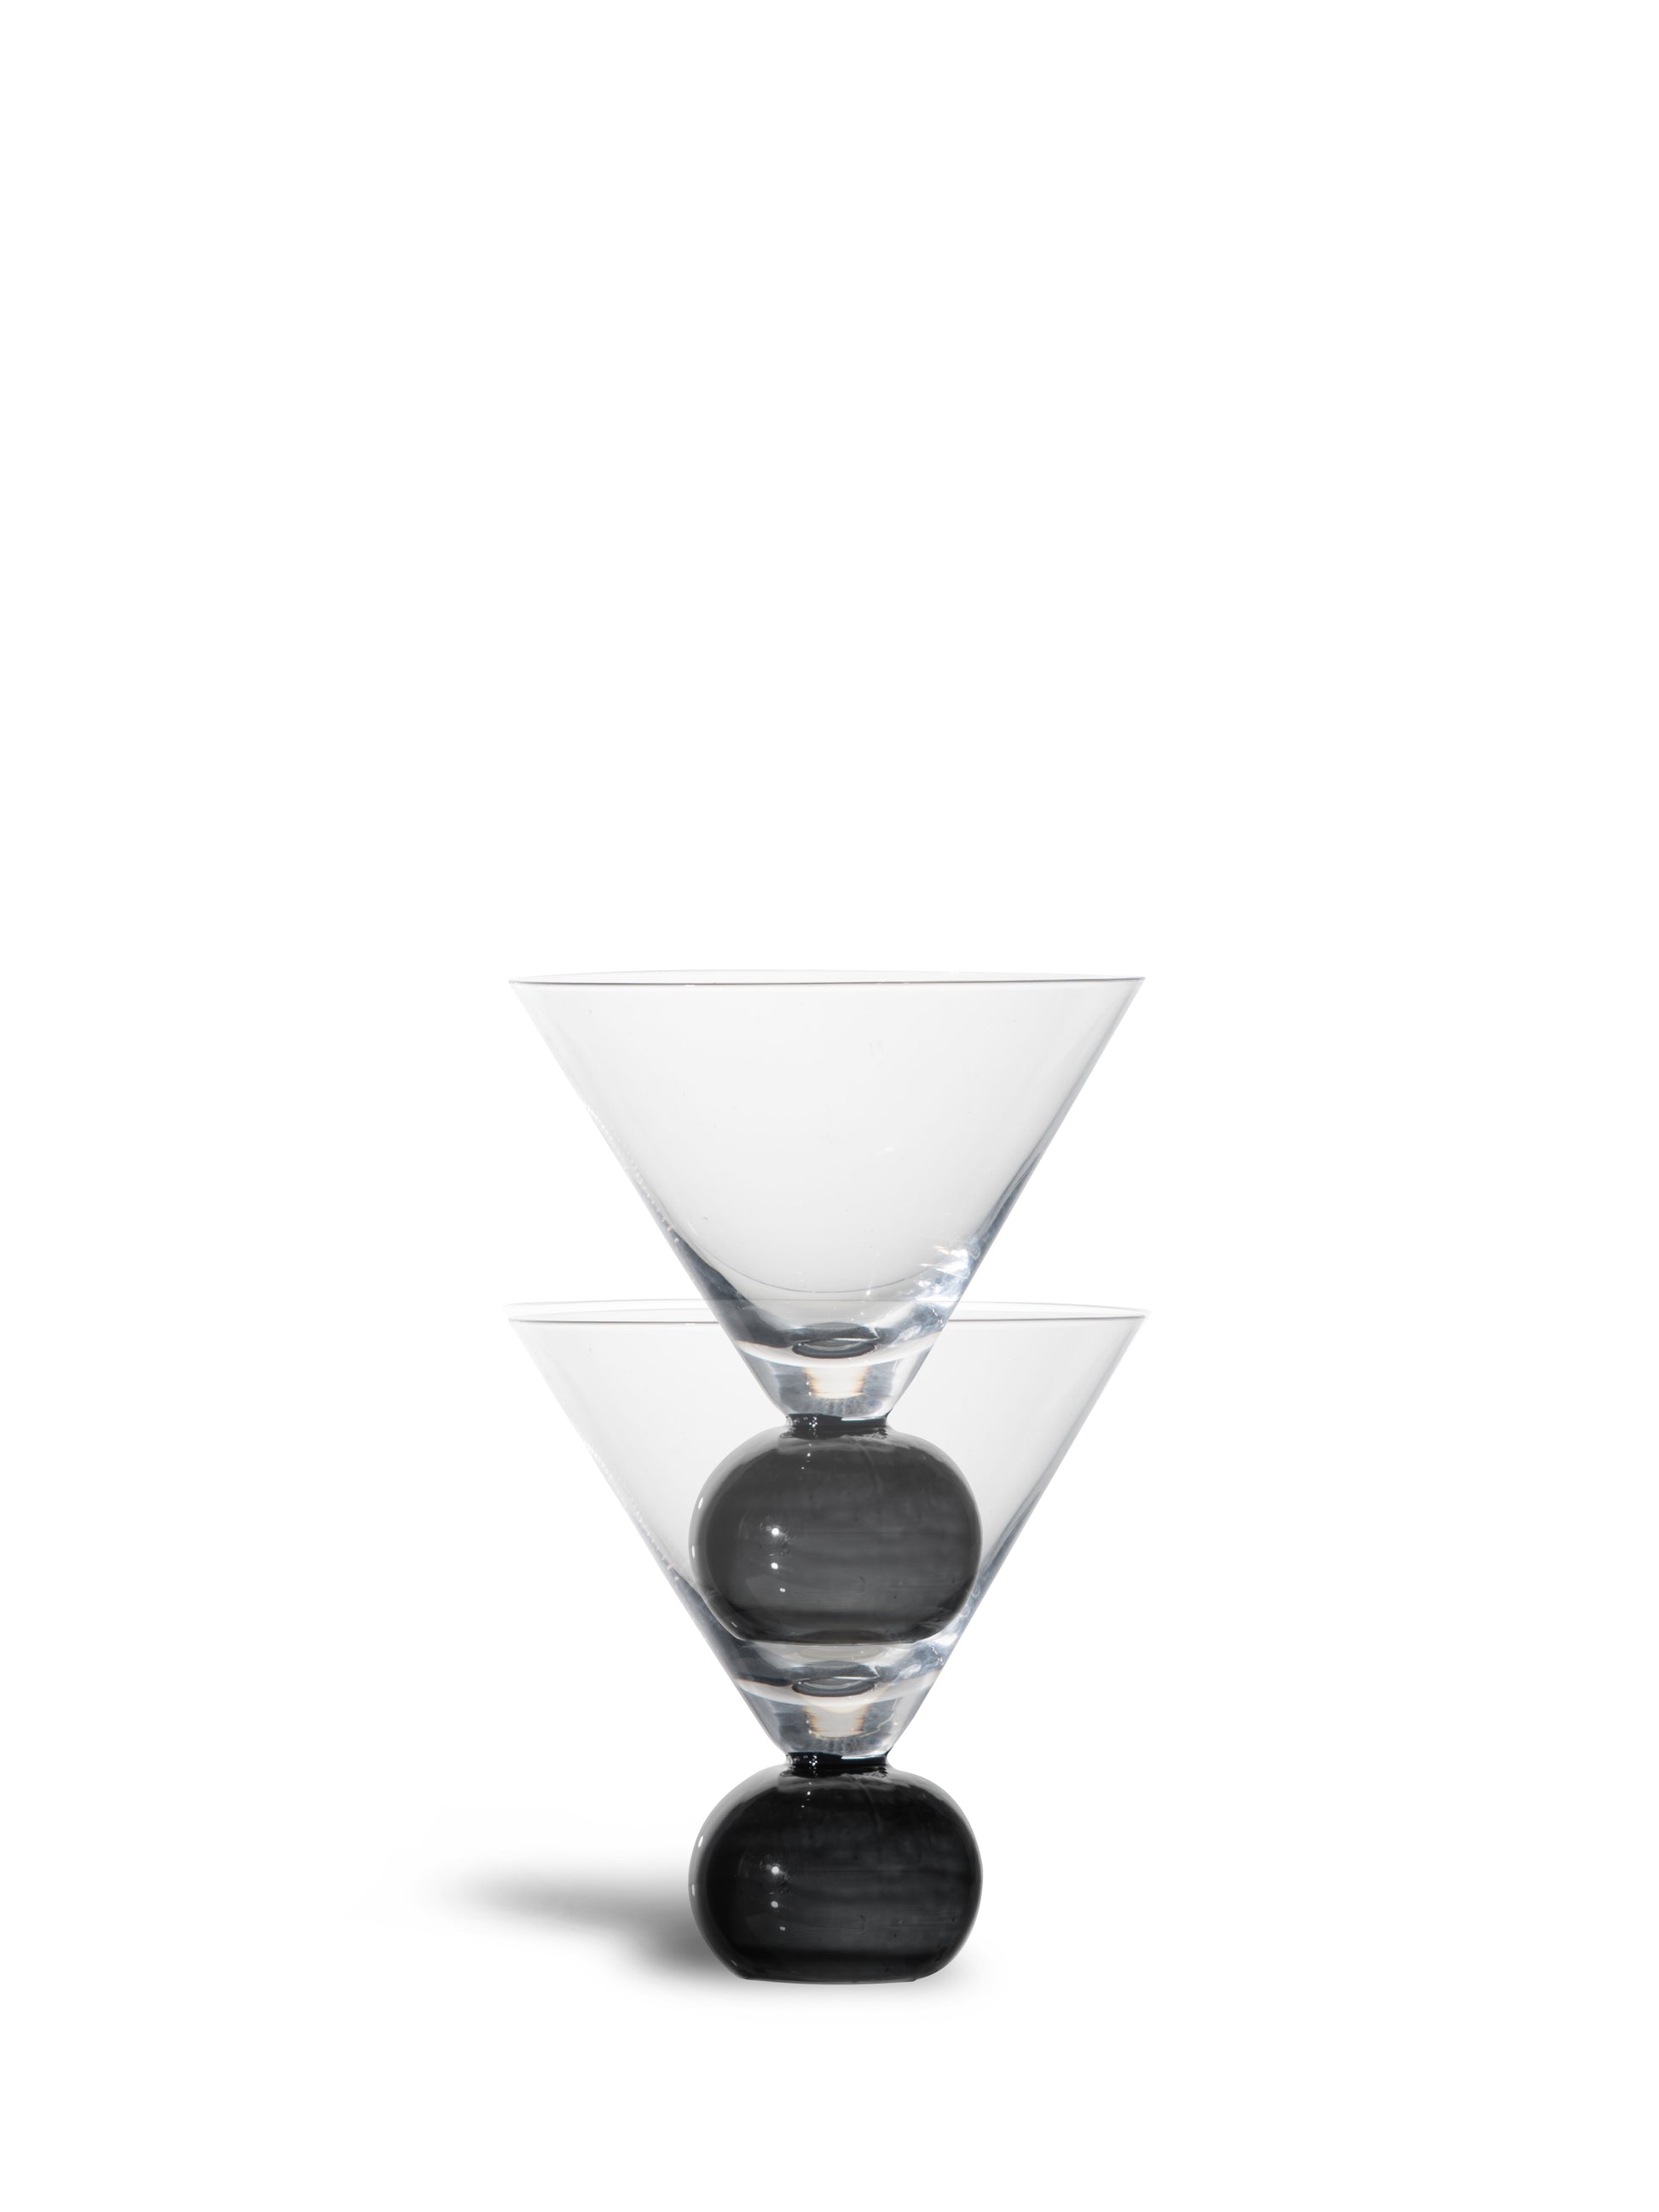 Byon by Widgeteer Spice Martini Glasses, Set of 2 - Black